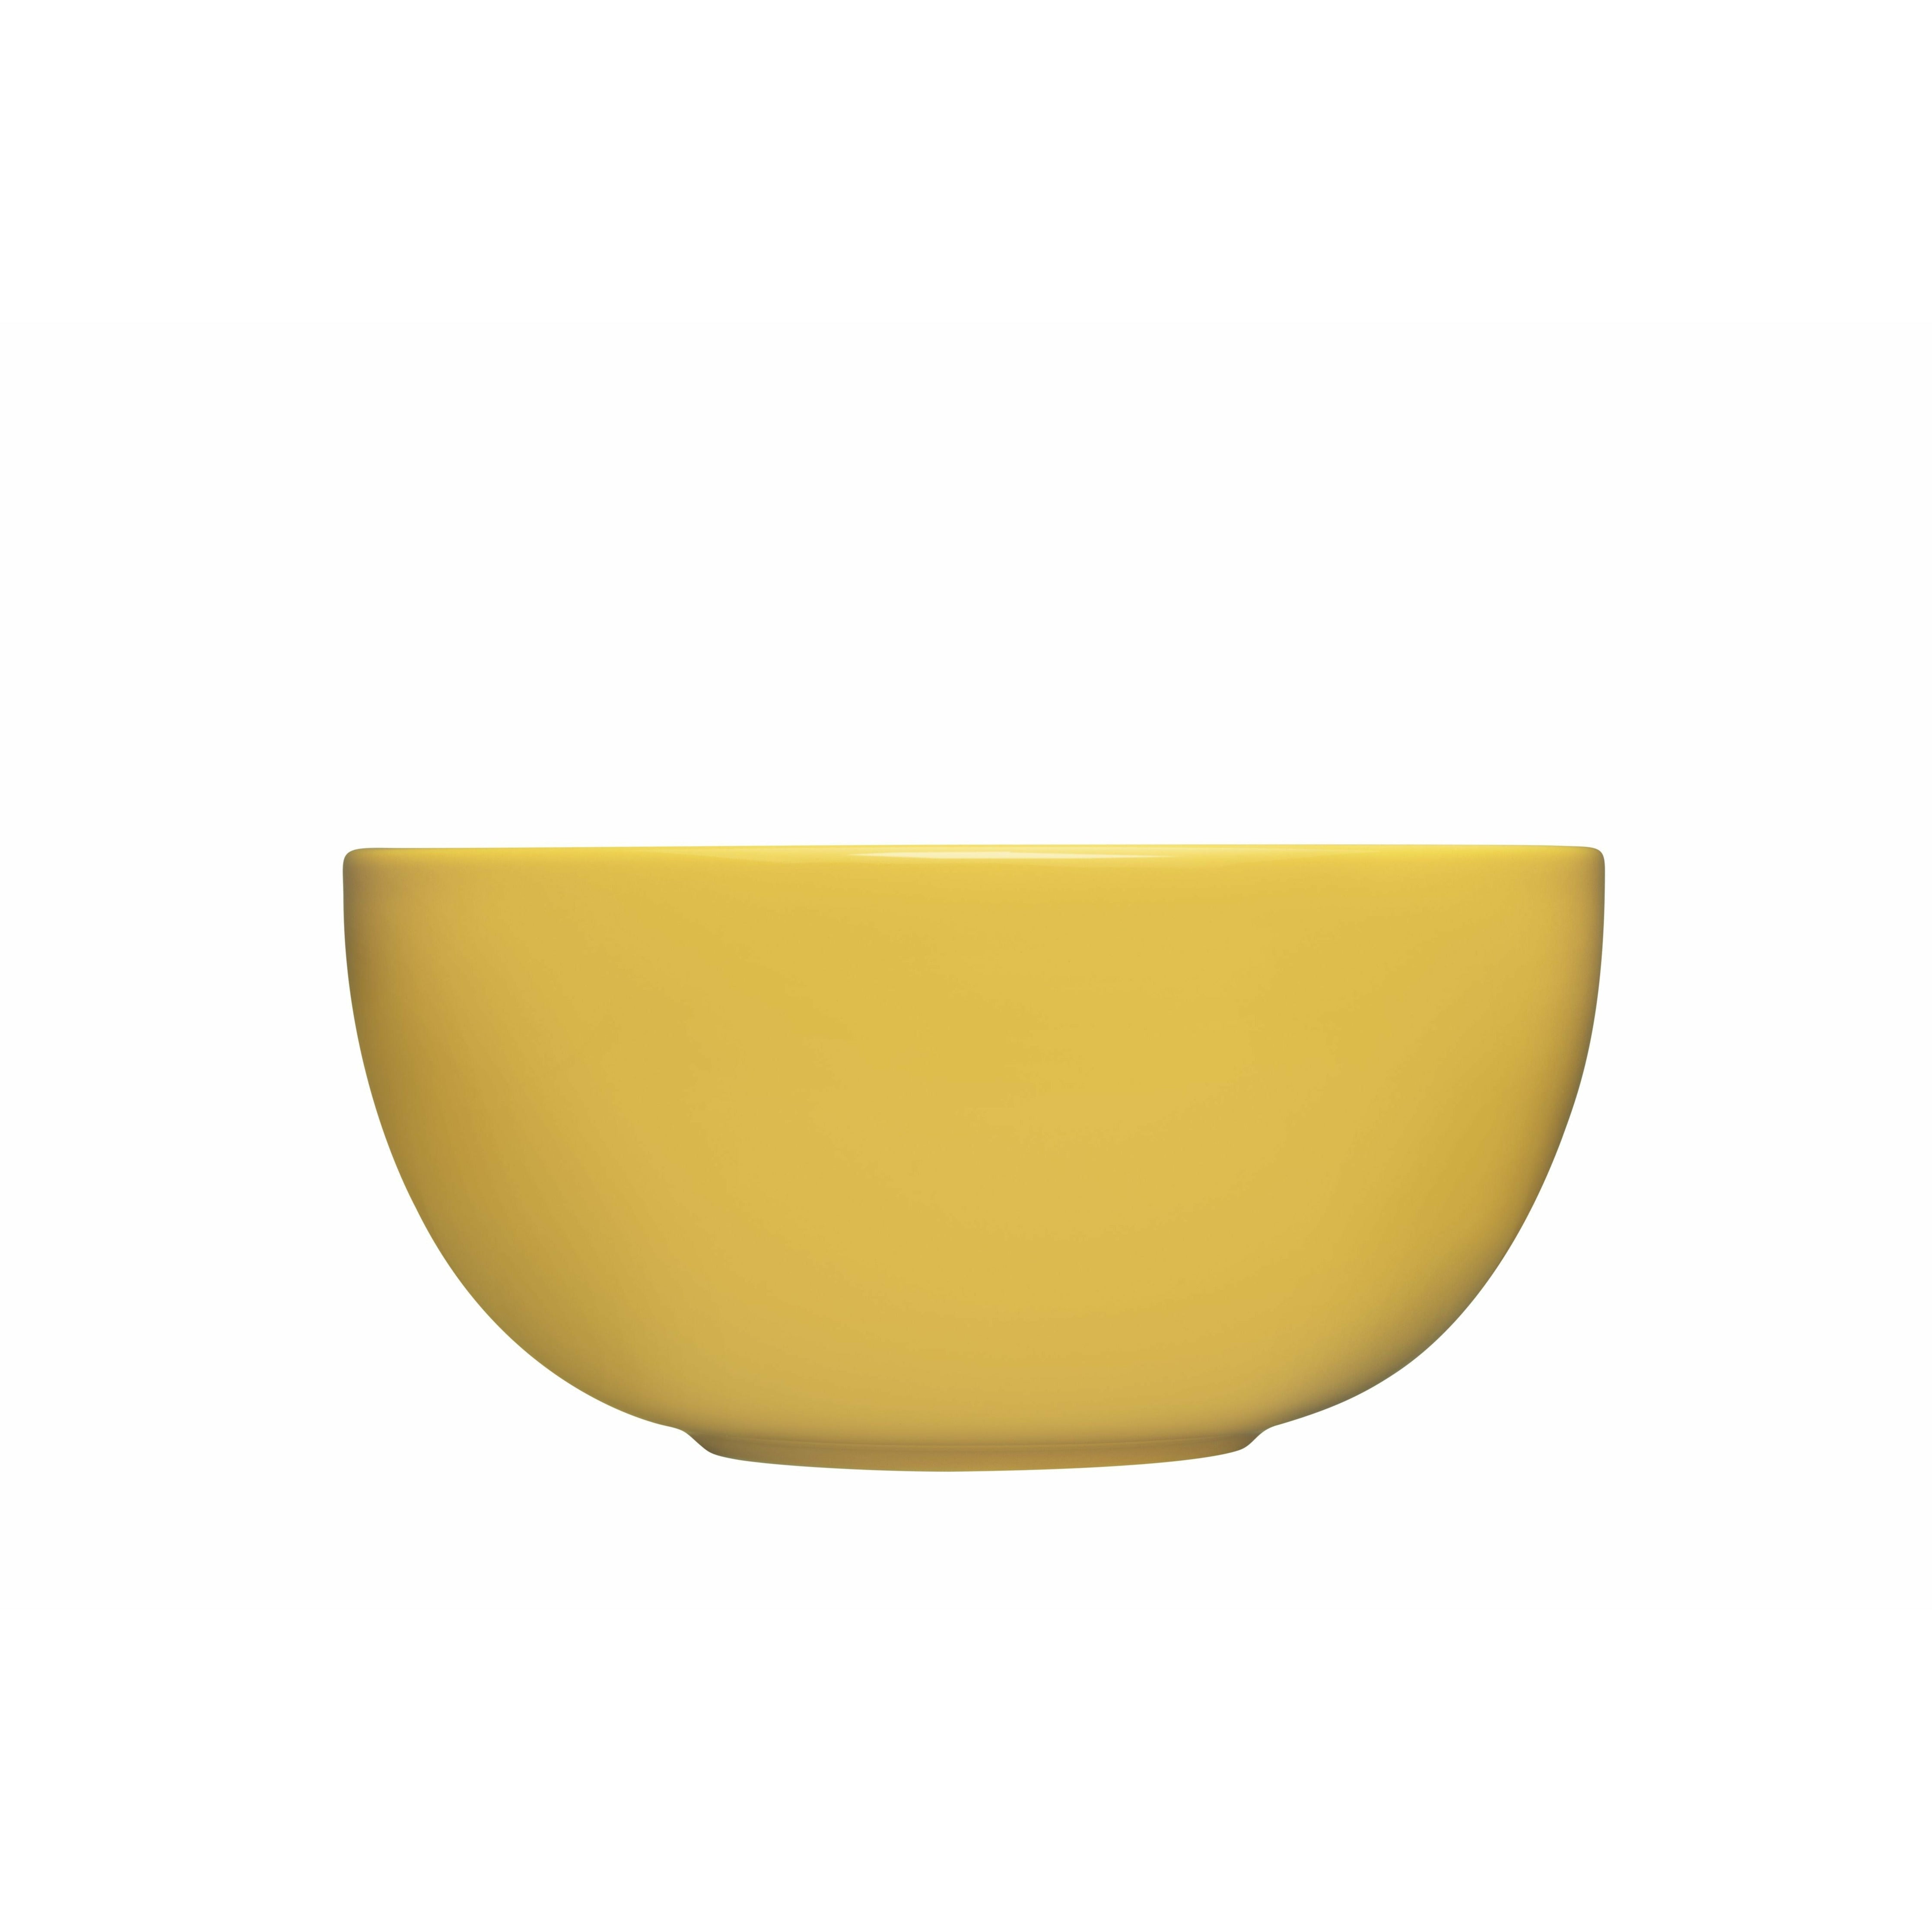 Iittala Teema Bowl 3,4 L, affinando il giallo